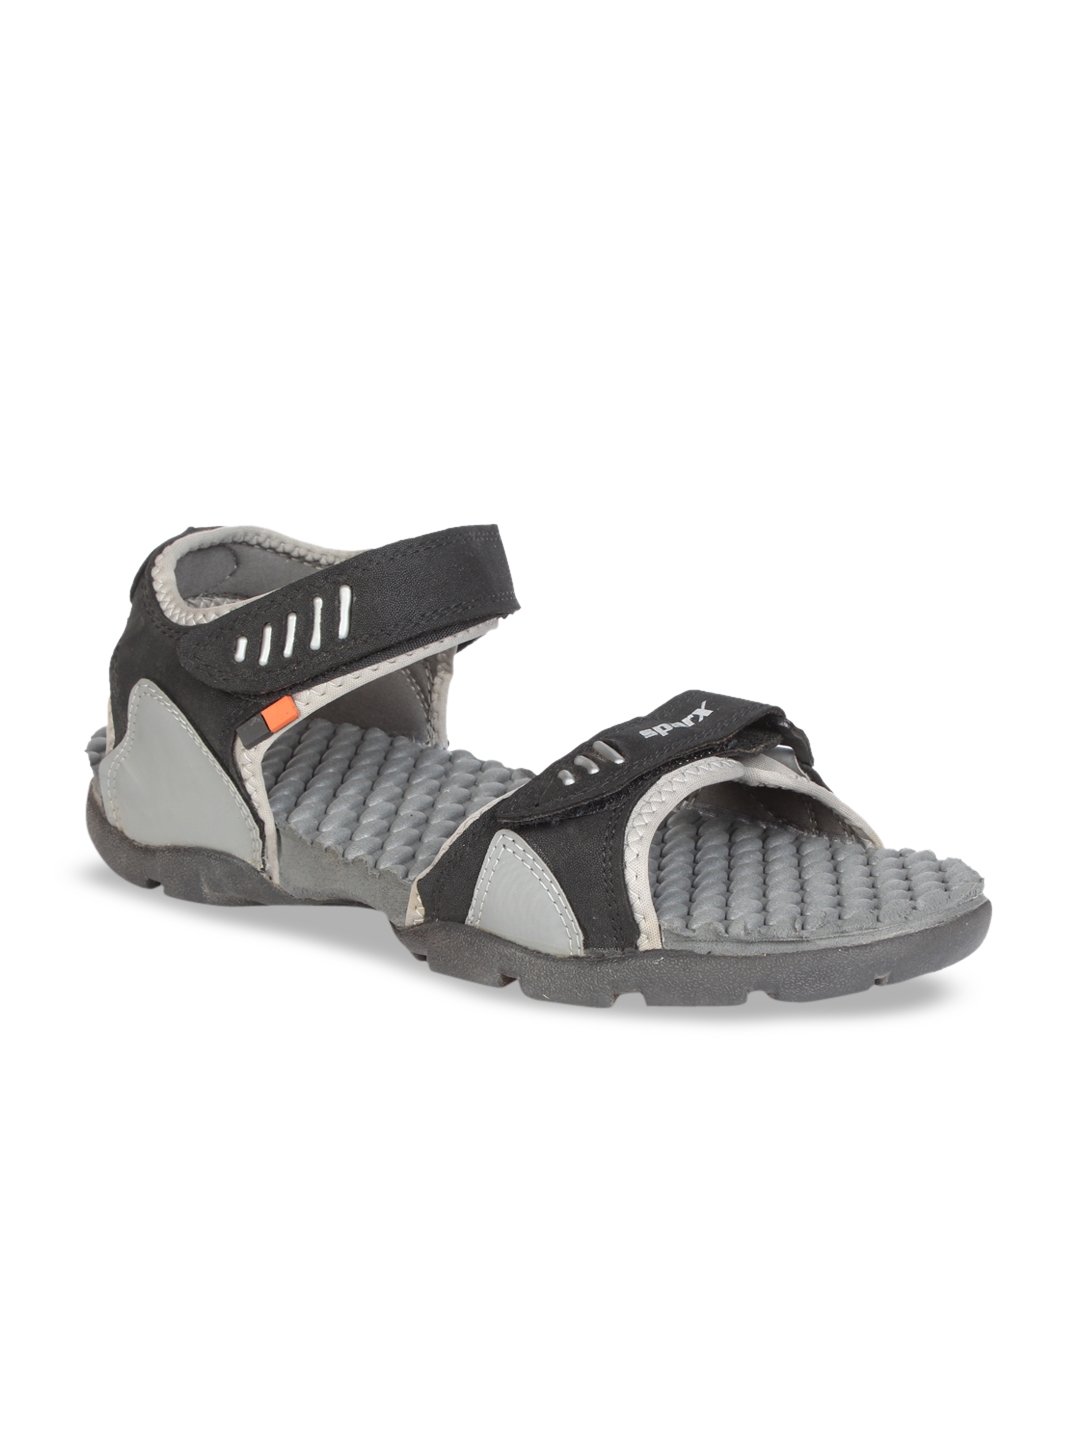 sparx slippers black grey